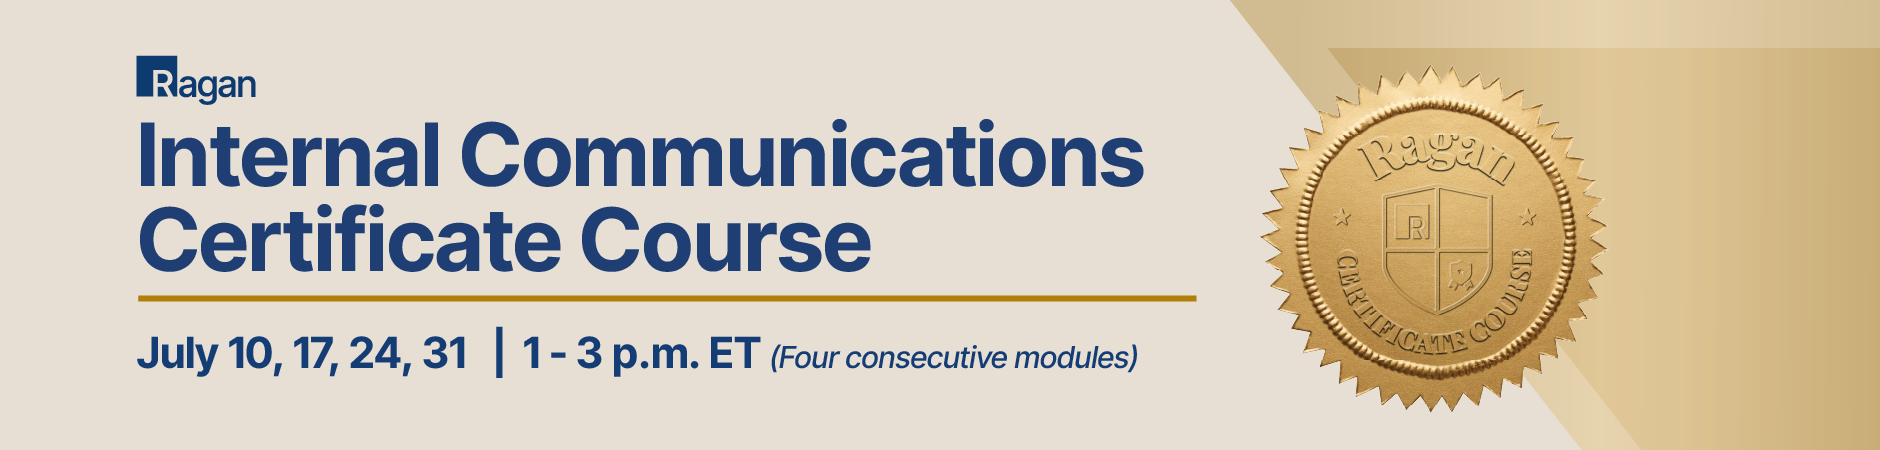 Internal Communications Certificate Course